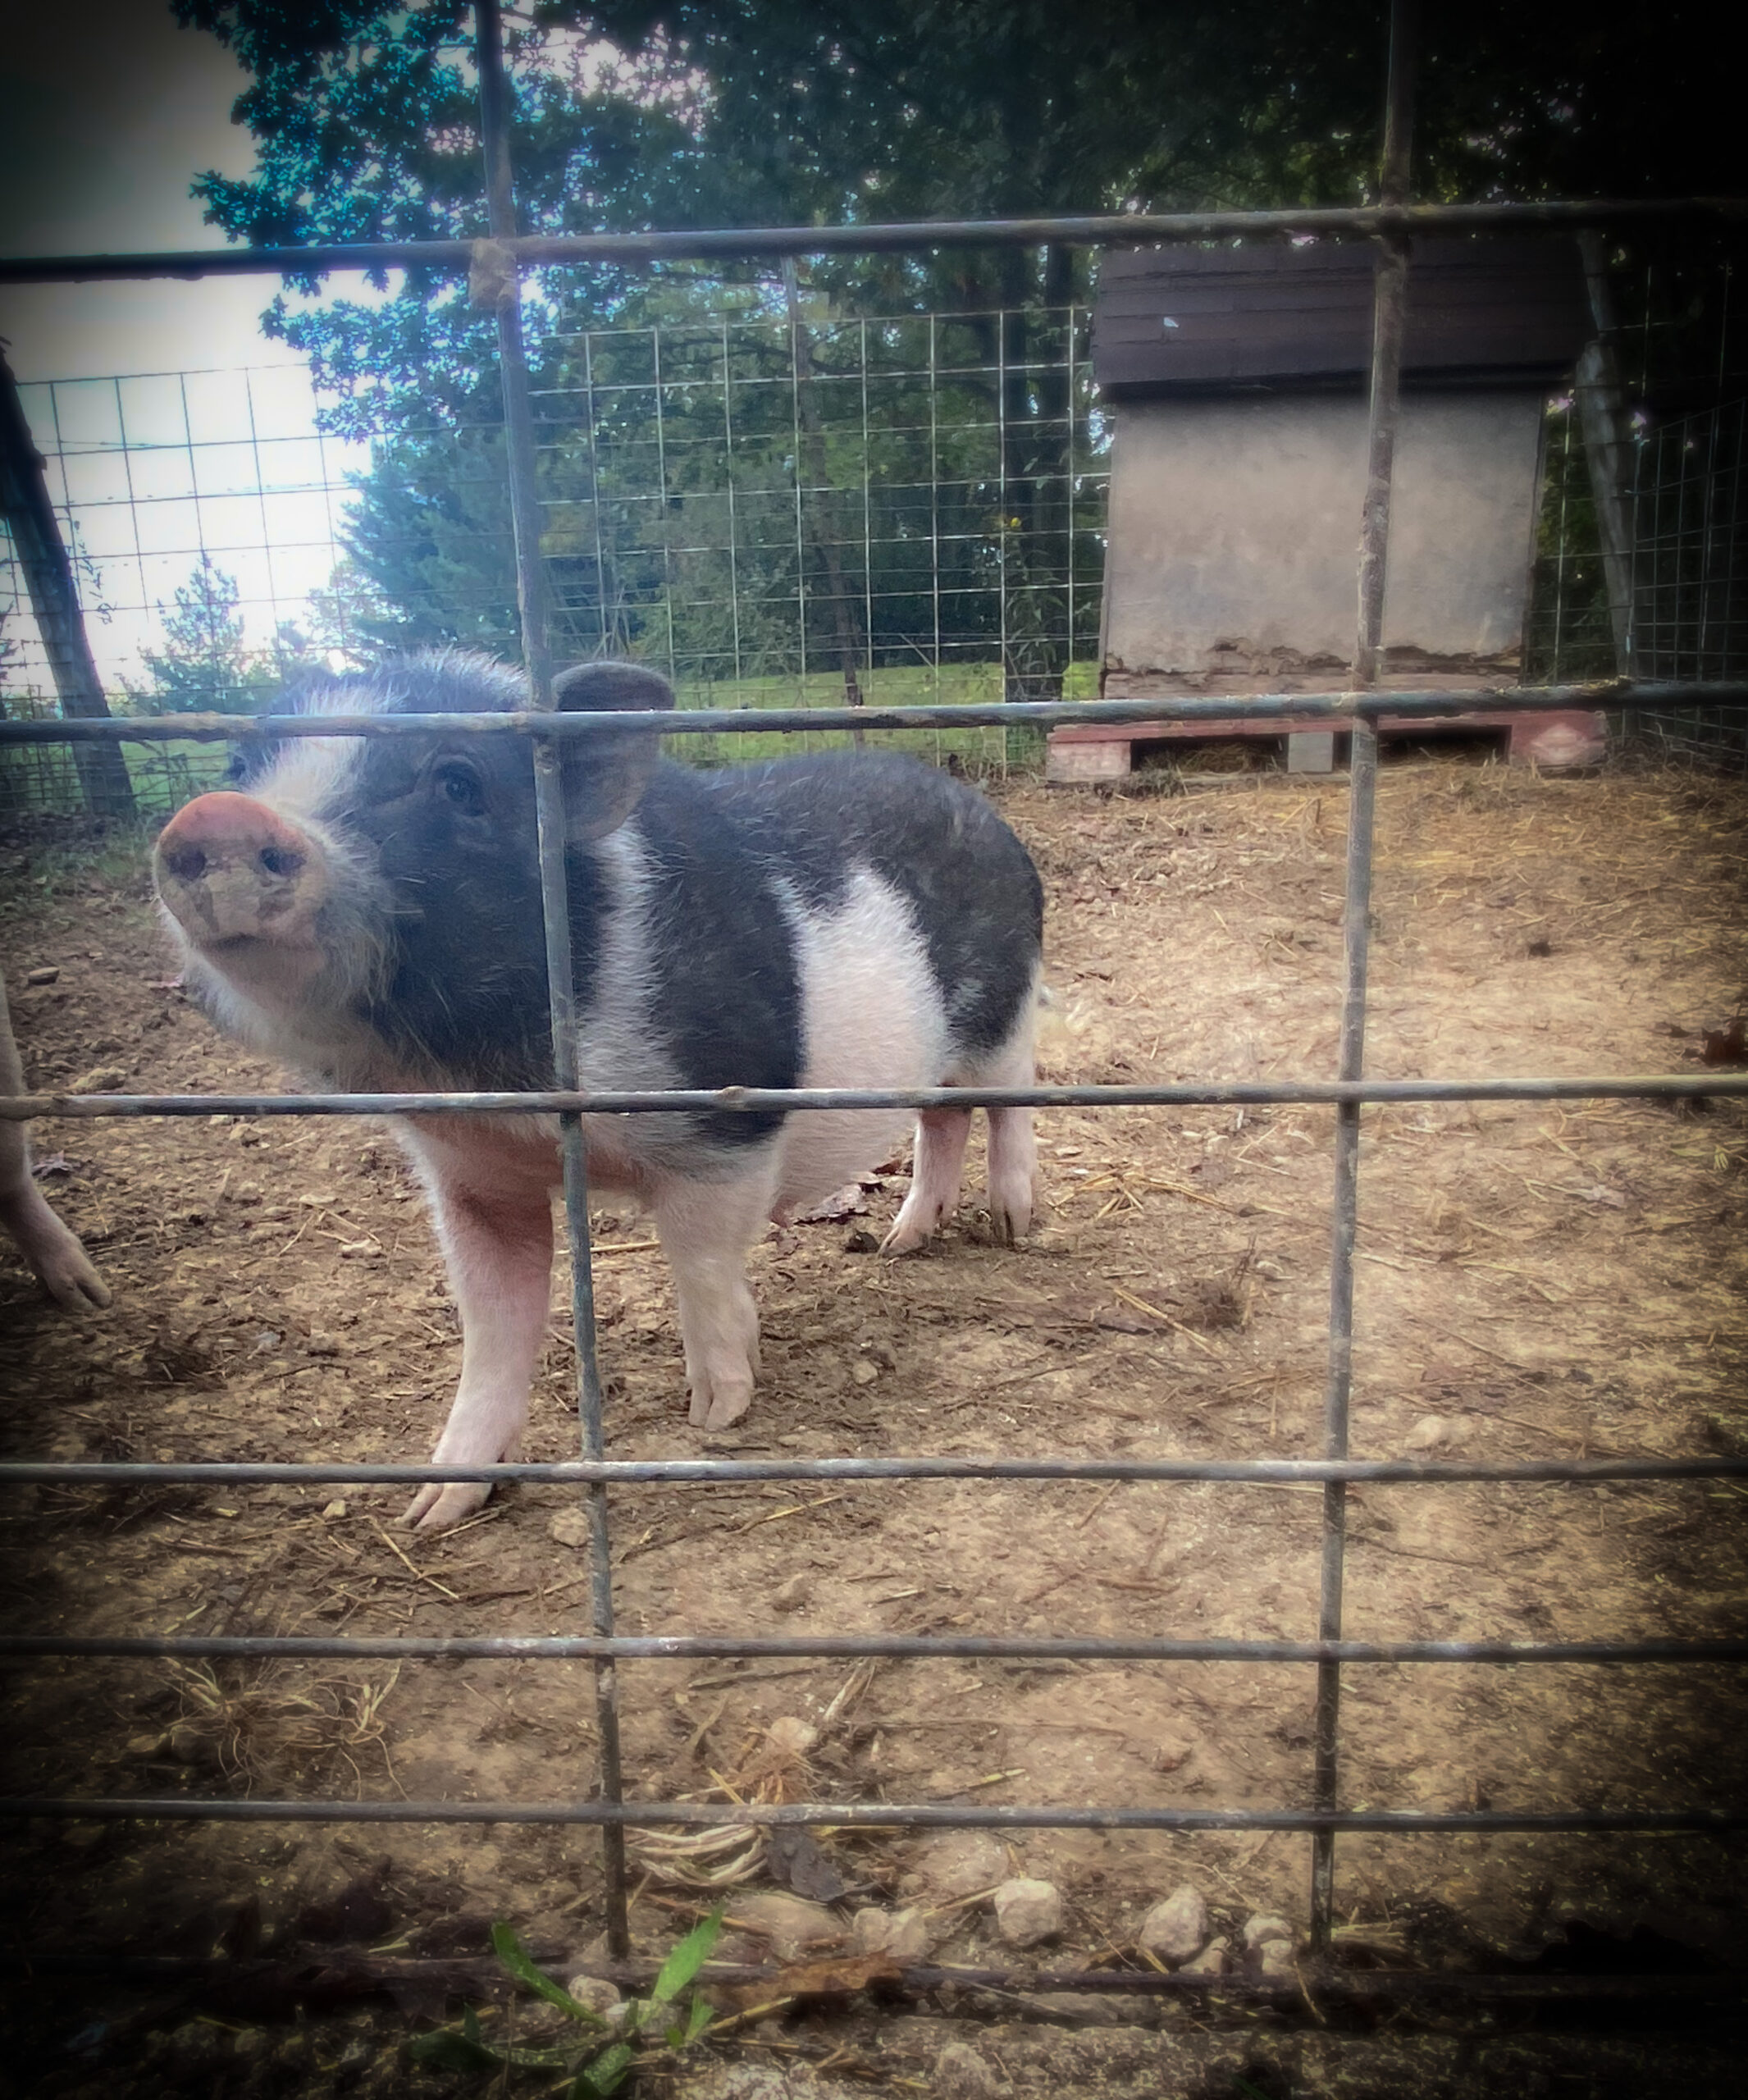 mini pig